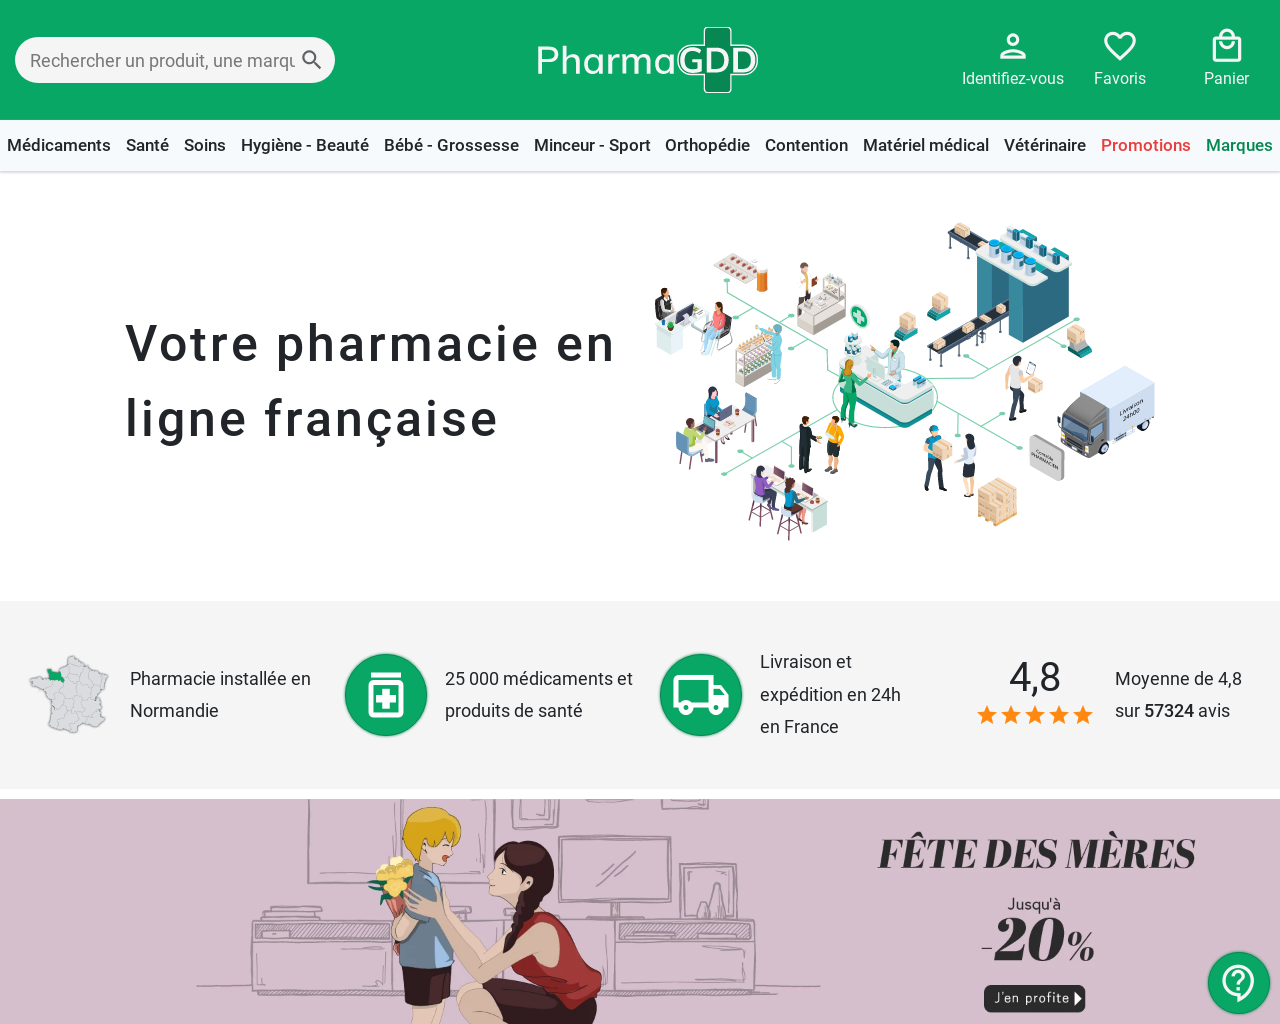 www.pharma-gdd.com